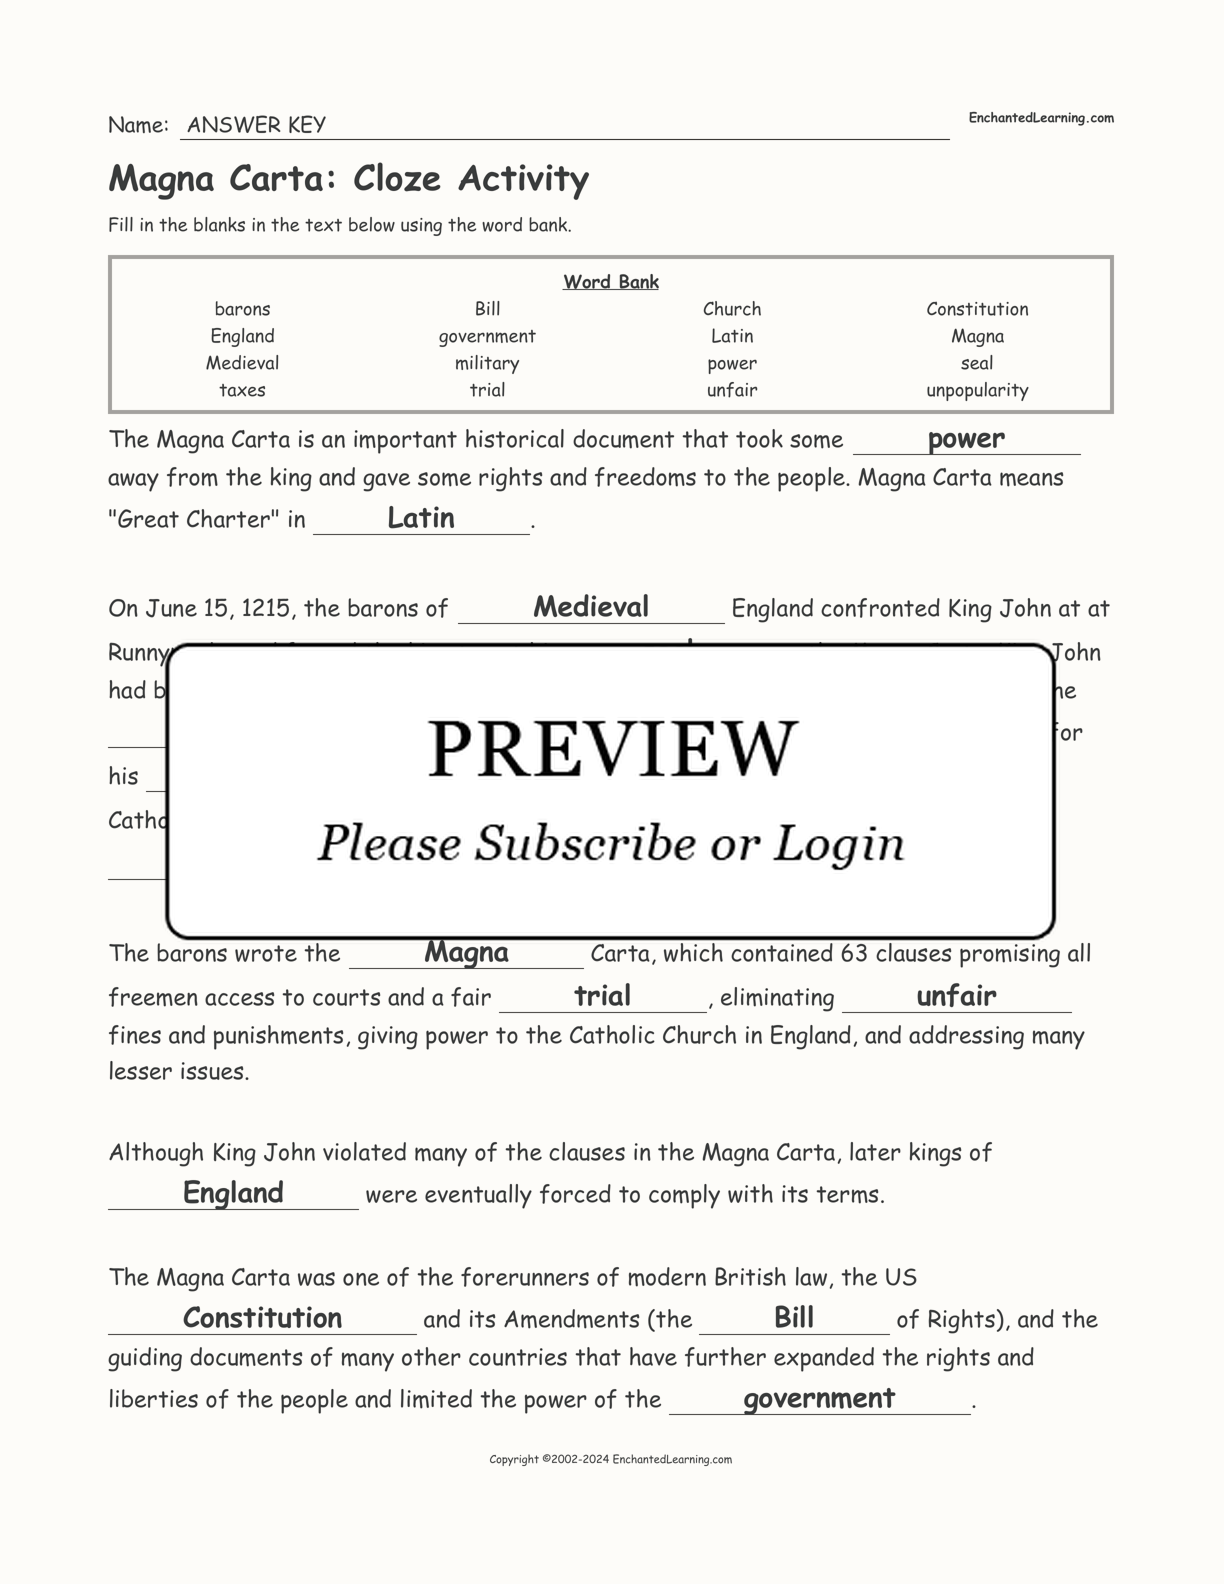 Magna Carta: Cloze Activity interactive worksheet page 2